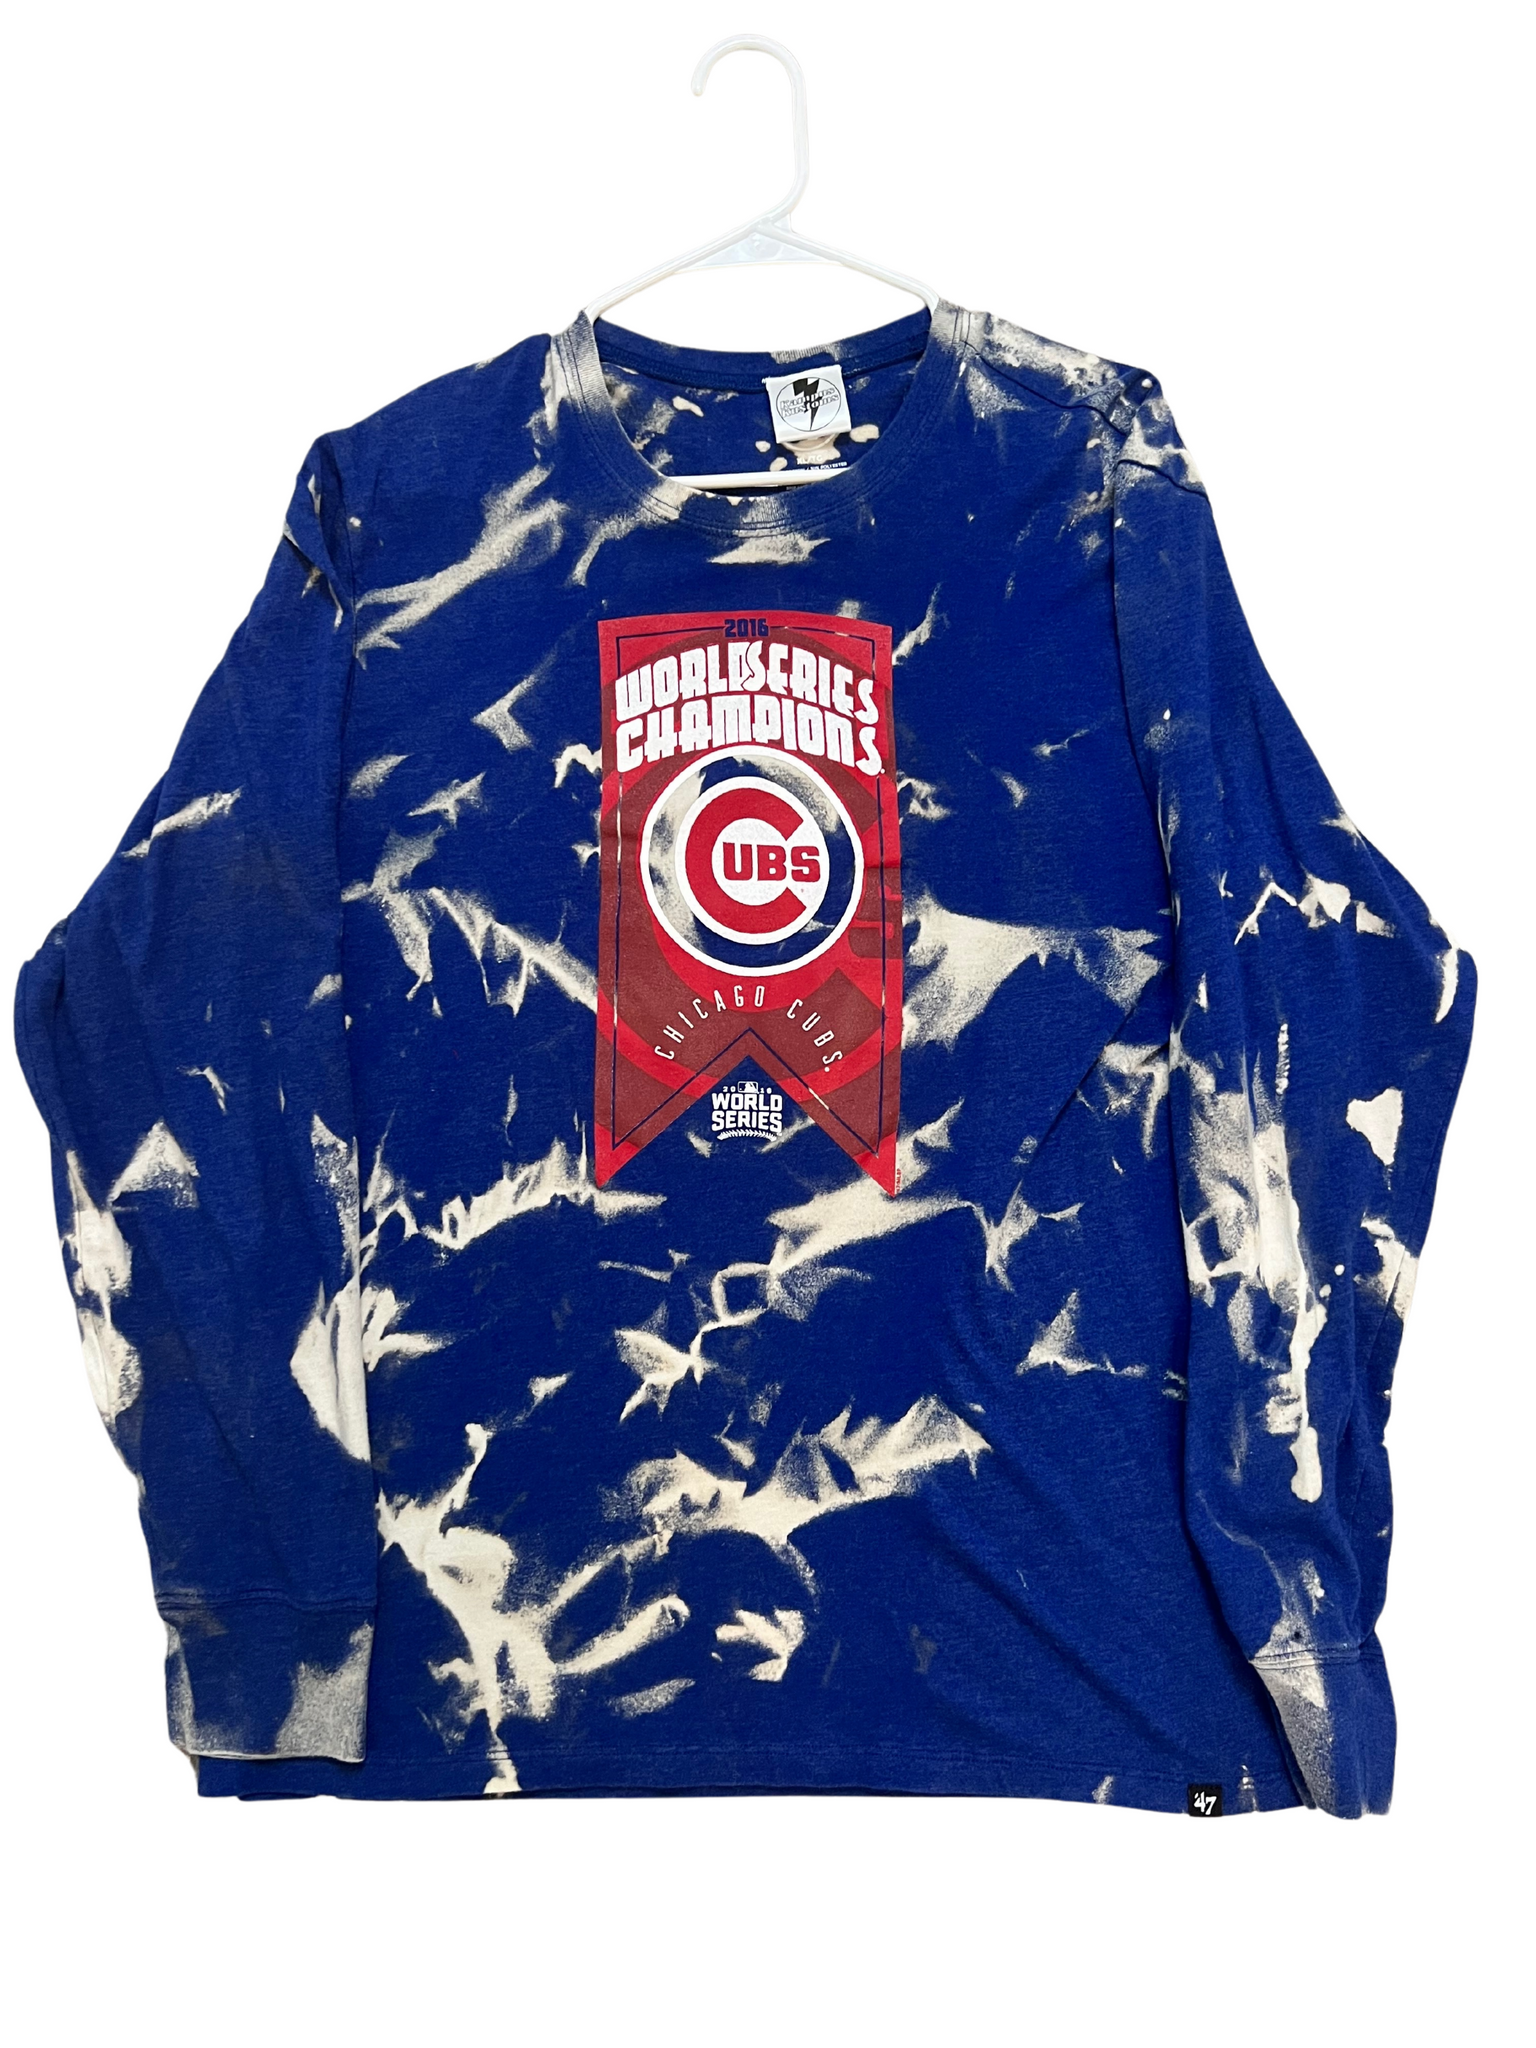 Chicago Cubs Tie-dye Tee, Retro Shirt